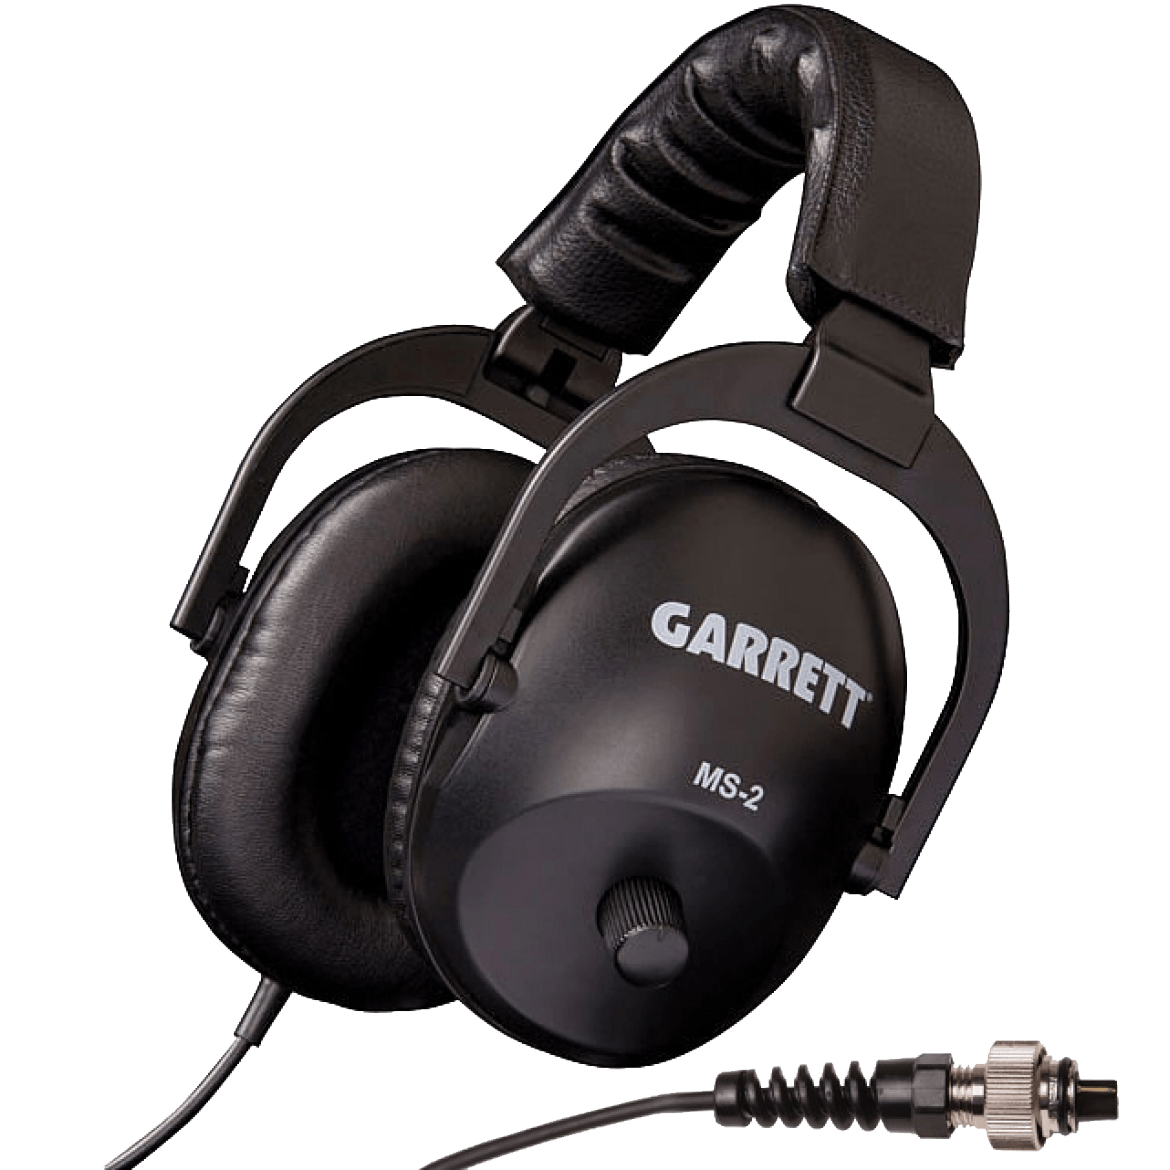 Garrett MS-2 Headphones - AT Version